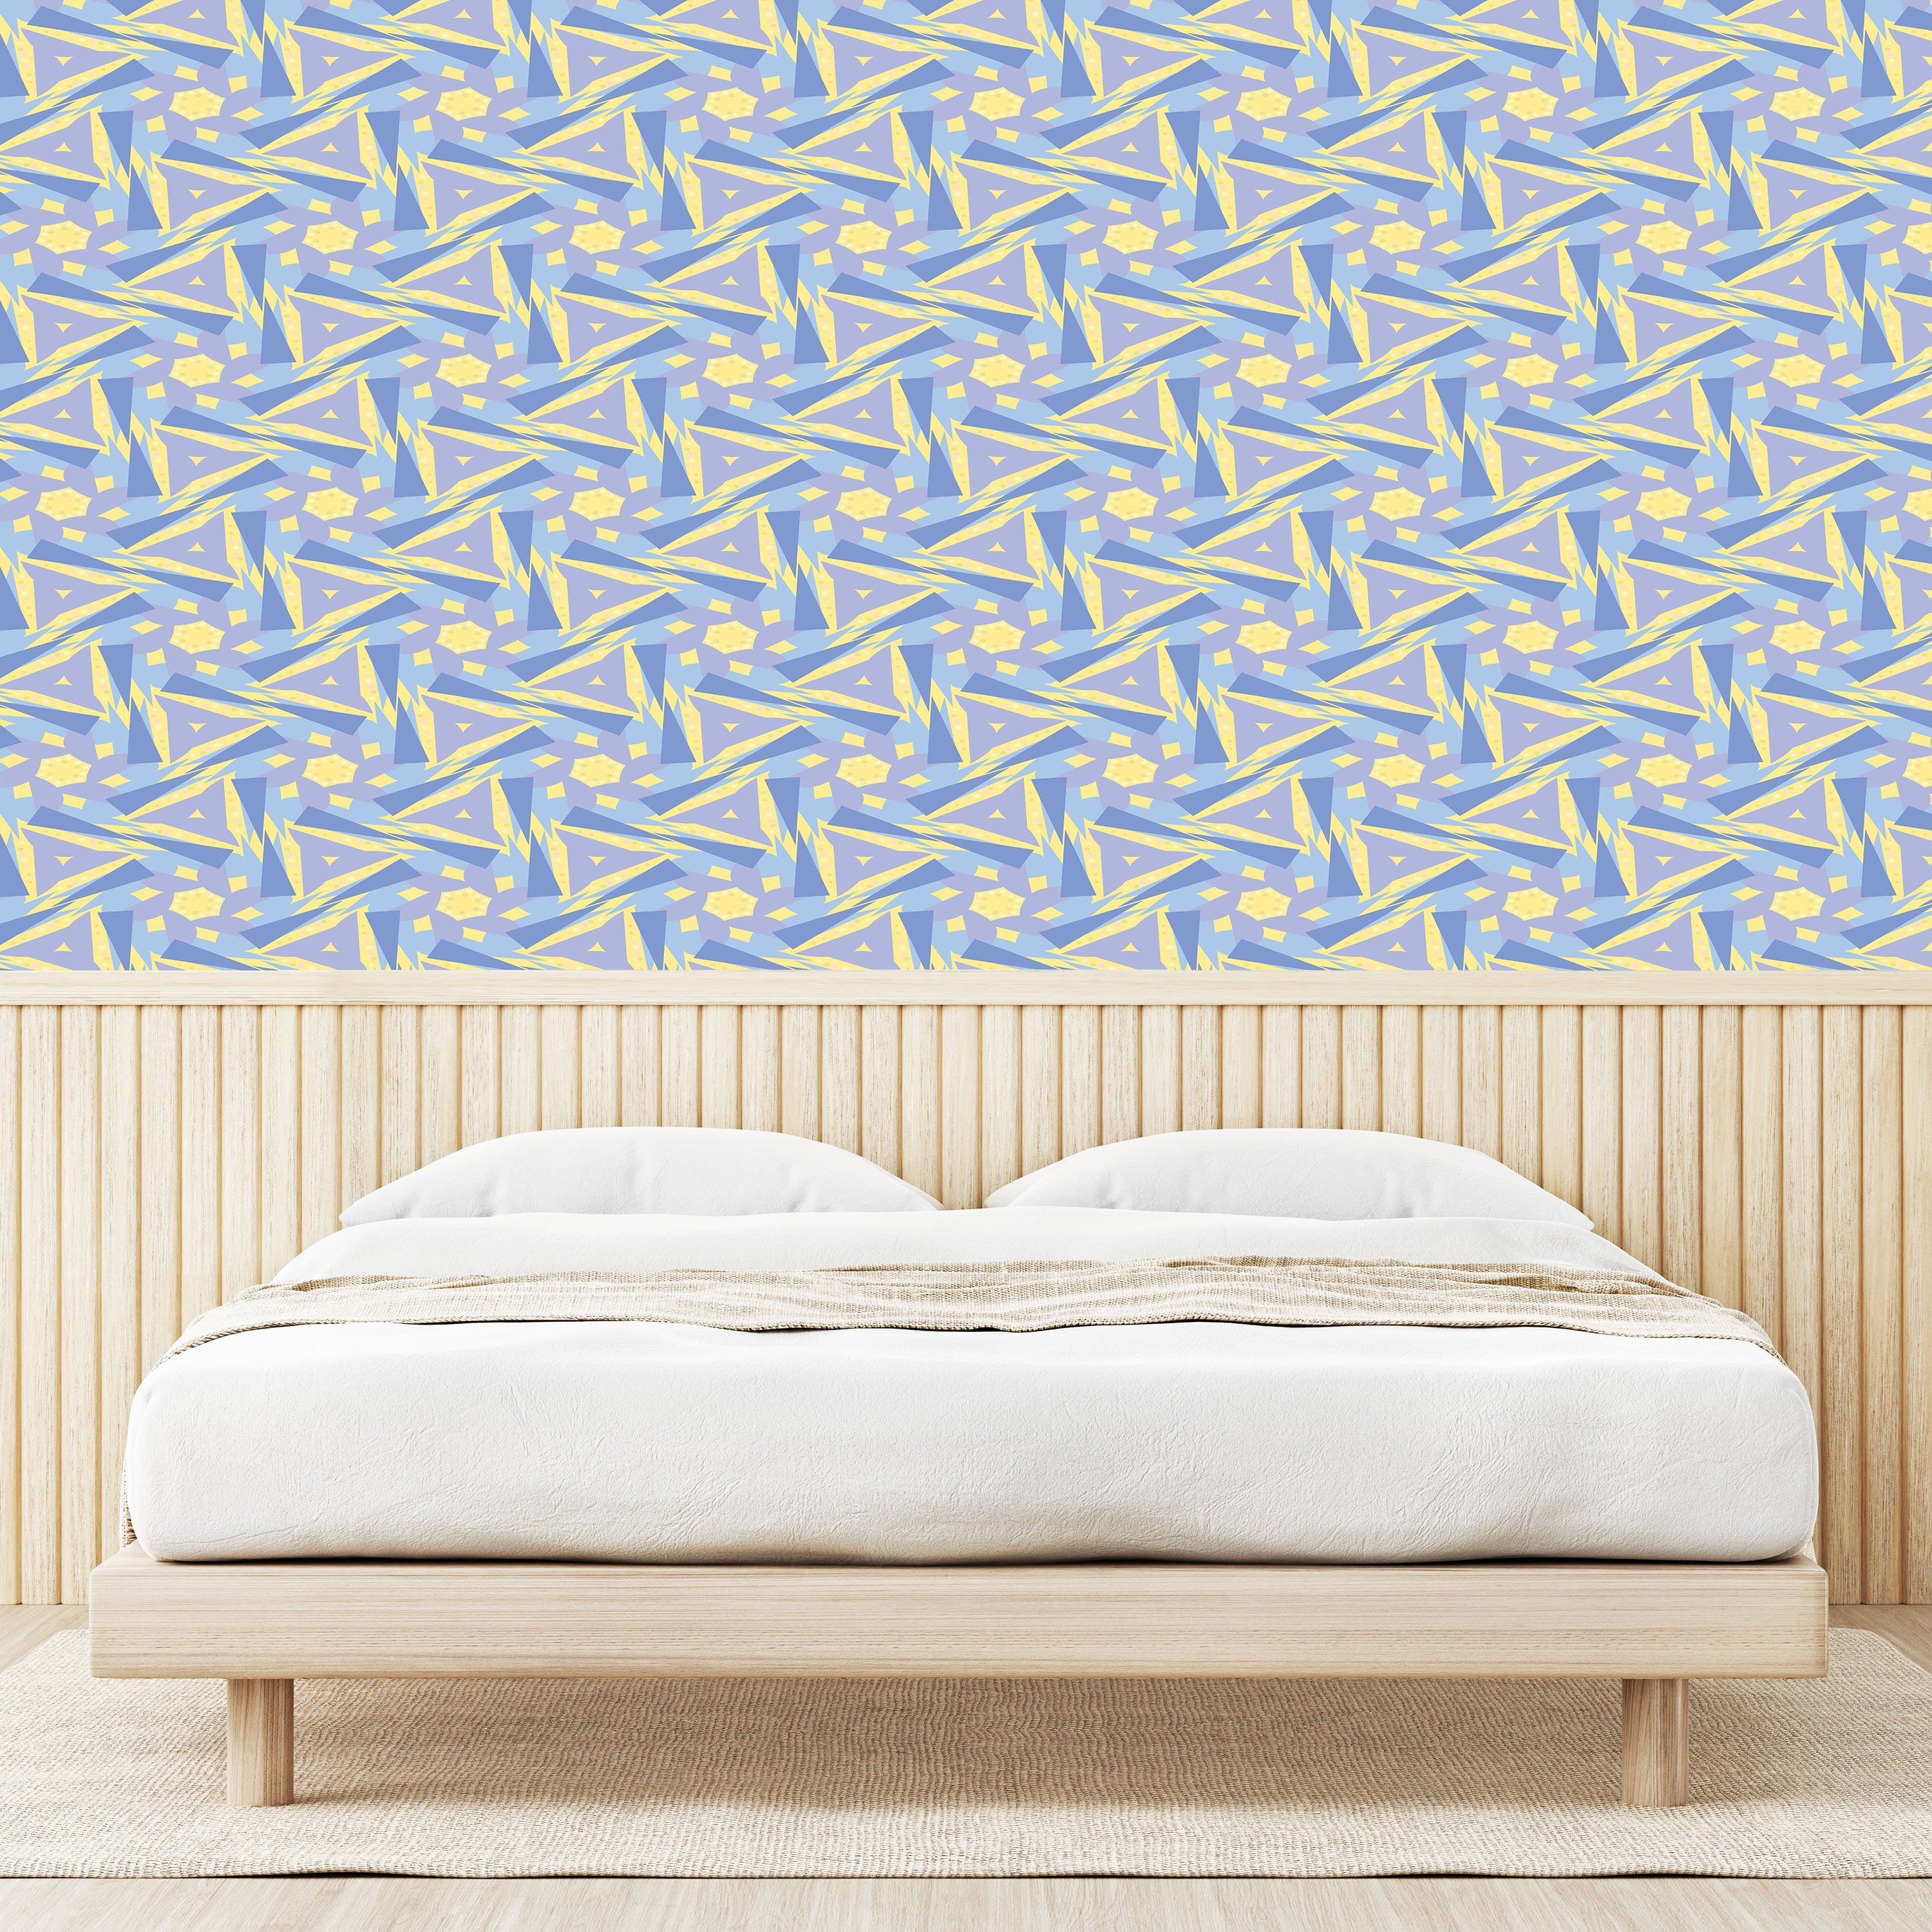 Abakuhaus Vinyltapete Pastel Moderne Wohnzimmer Formen selbstklebendes Küchenakzent, Polygonen